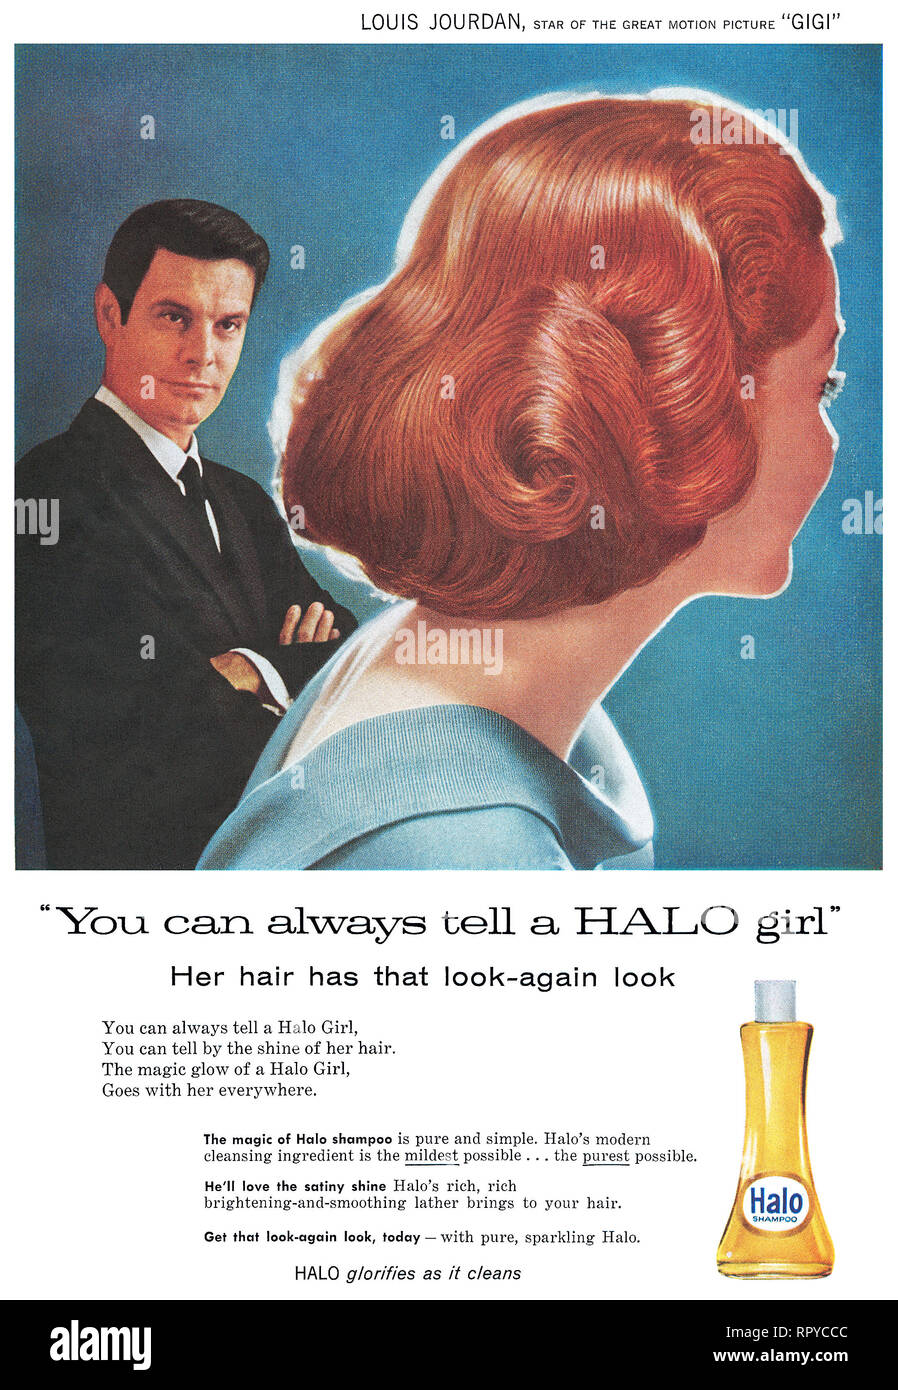 1959 British advertisement for Halo Shampoo, featuring actor Louis Jourdan. Stock Photo